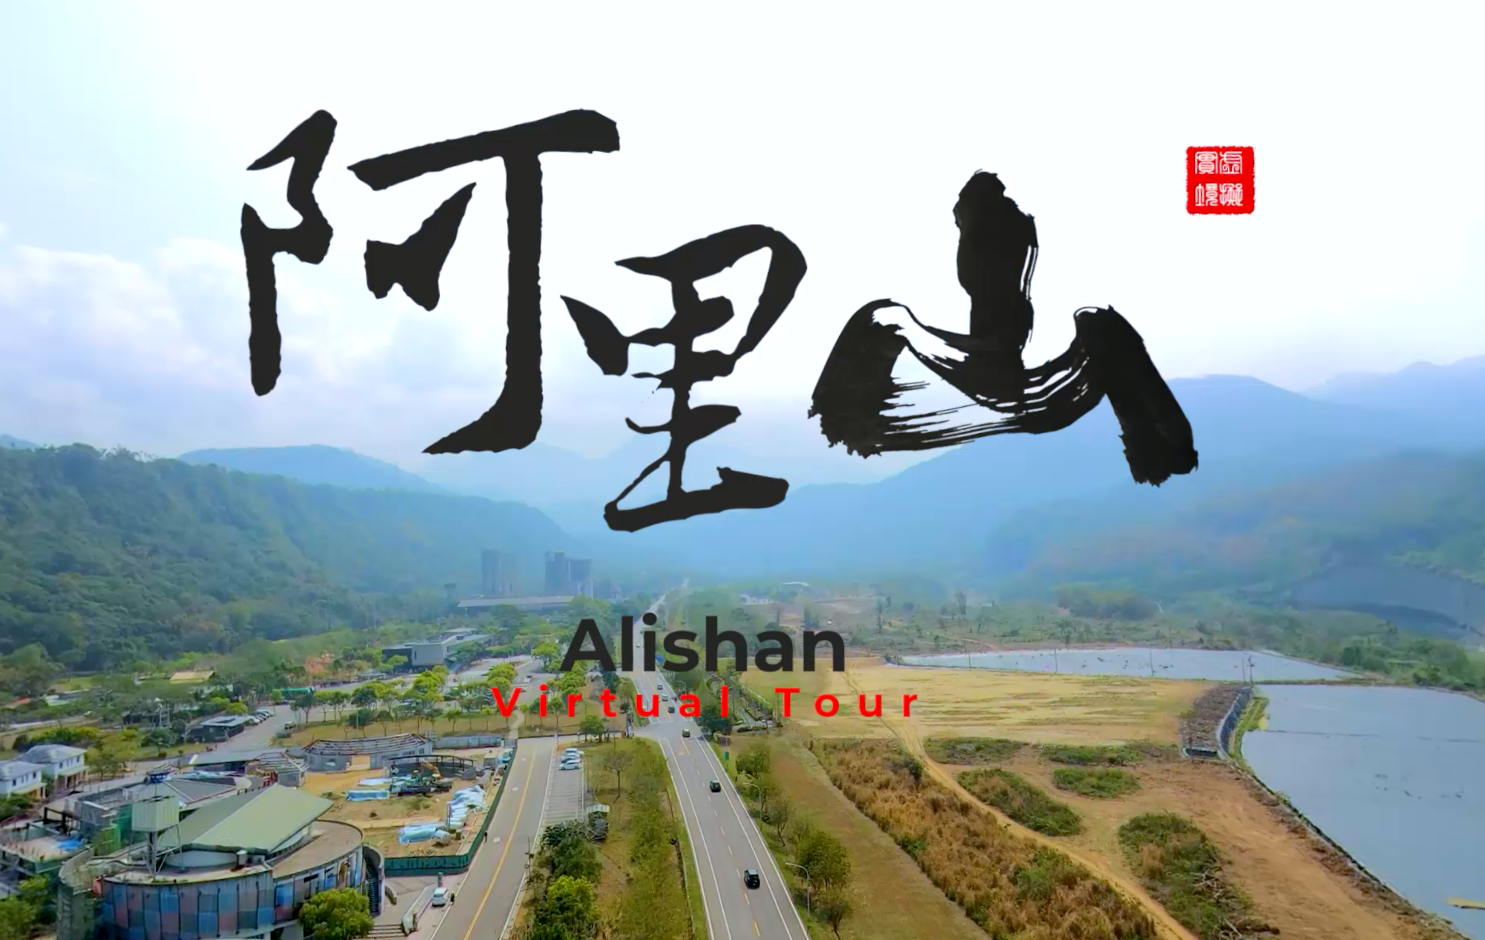  Slow Travel through Sea and Land: Alishan Marketing Video 360VR 8K 5min